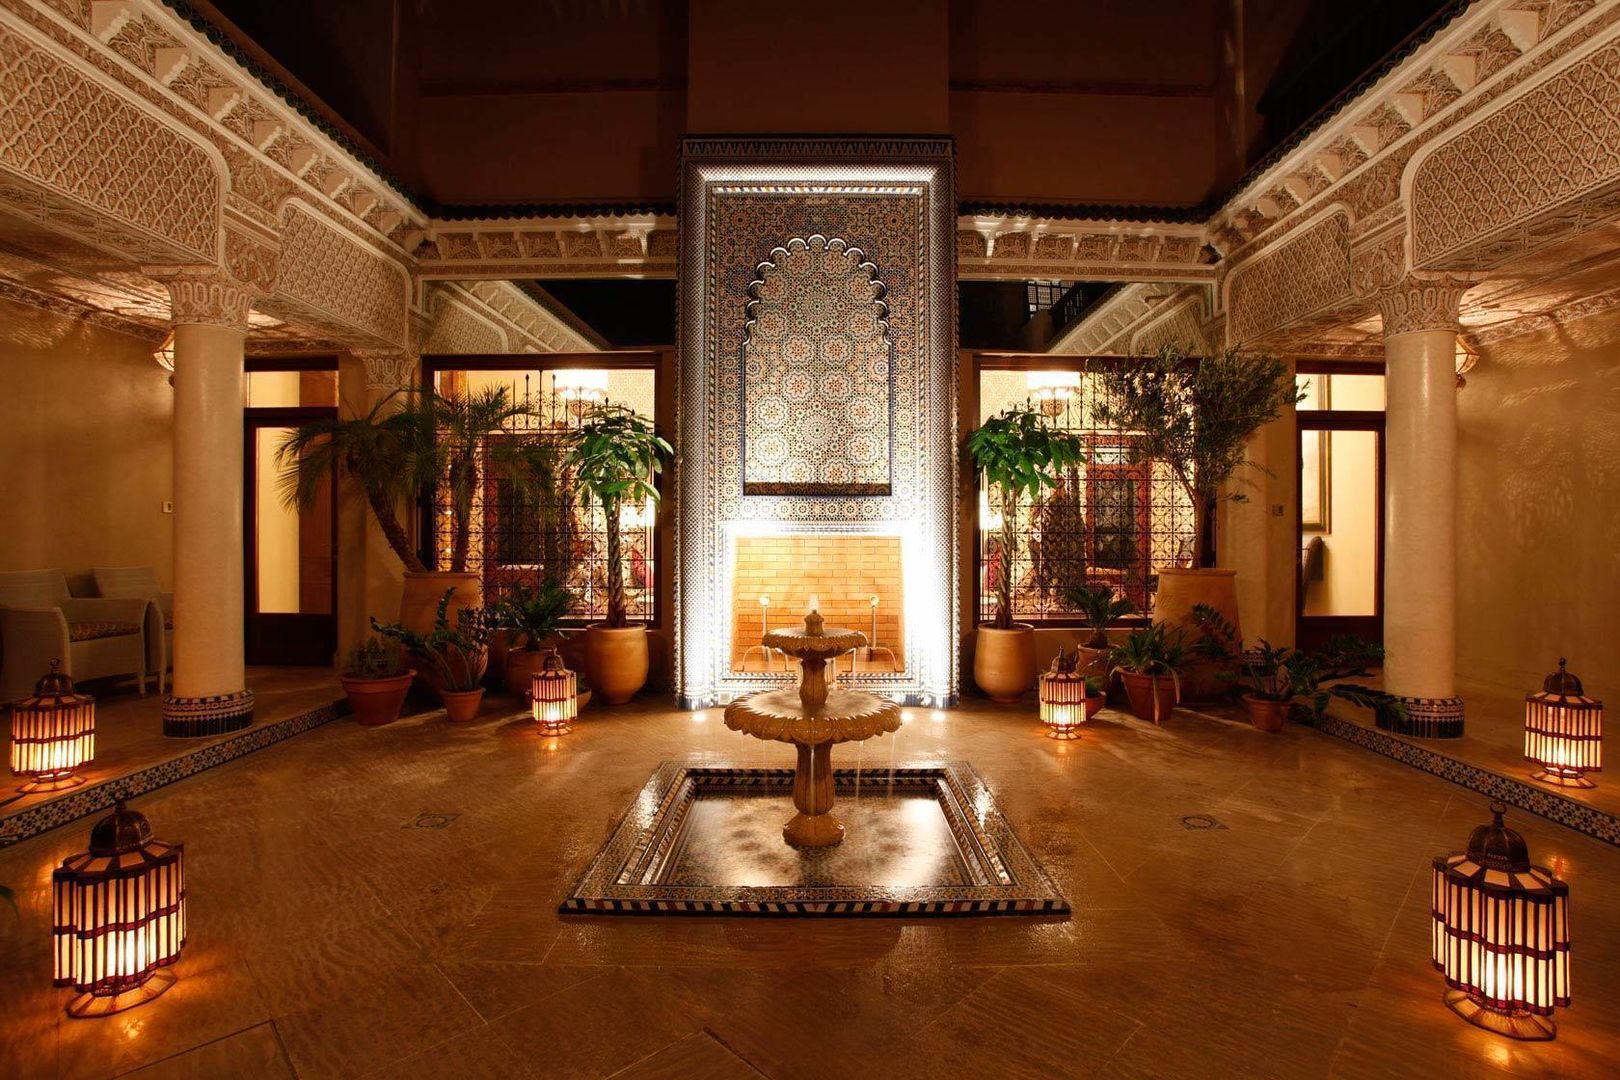 Private Villa, Morocco, Moroccan Bazaar Moroccan Bazaar Tường & sàn phong cách Địa Trung Hải Wall & floor coverings